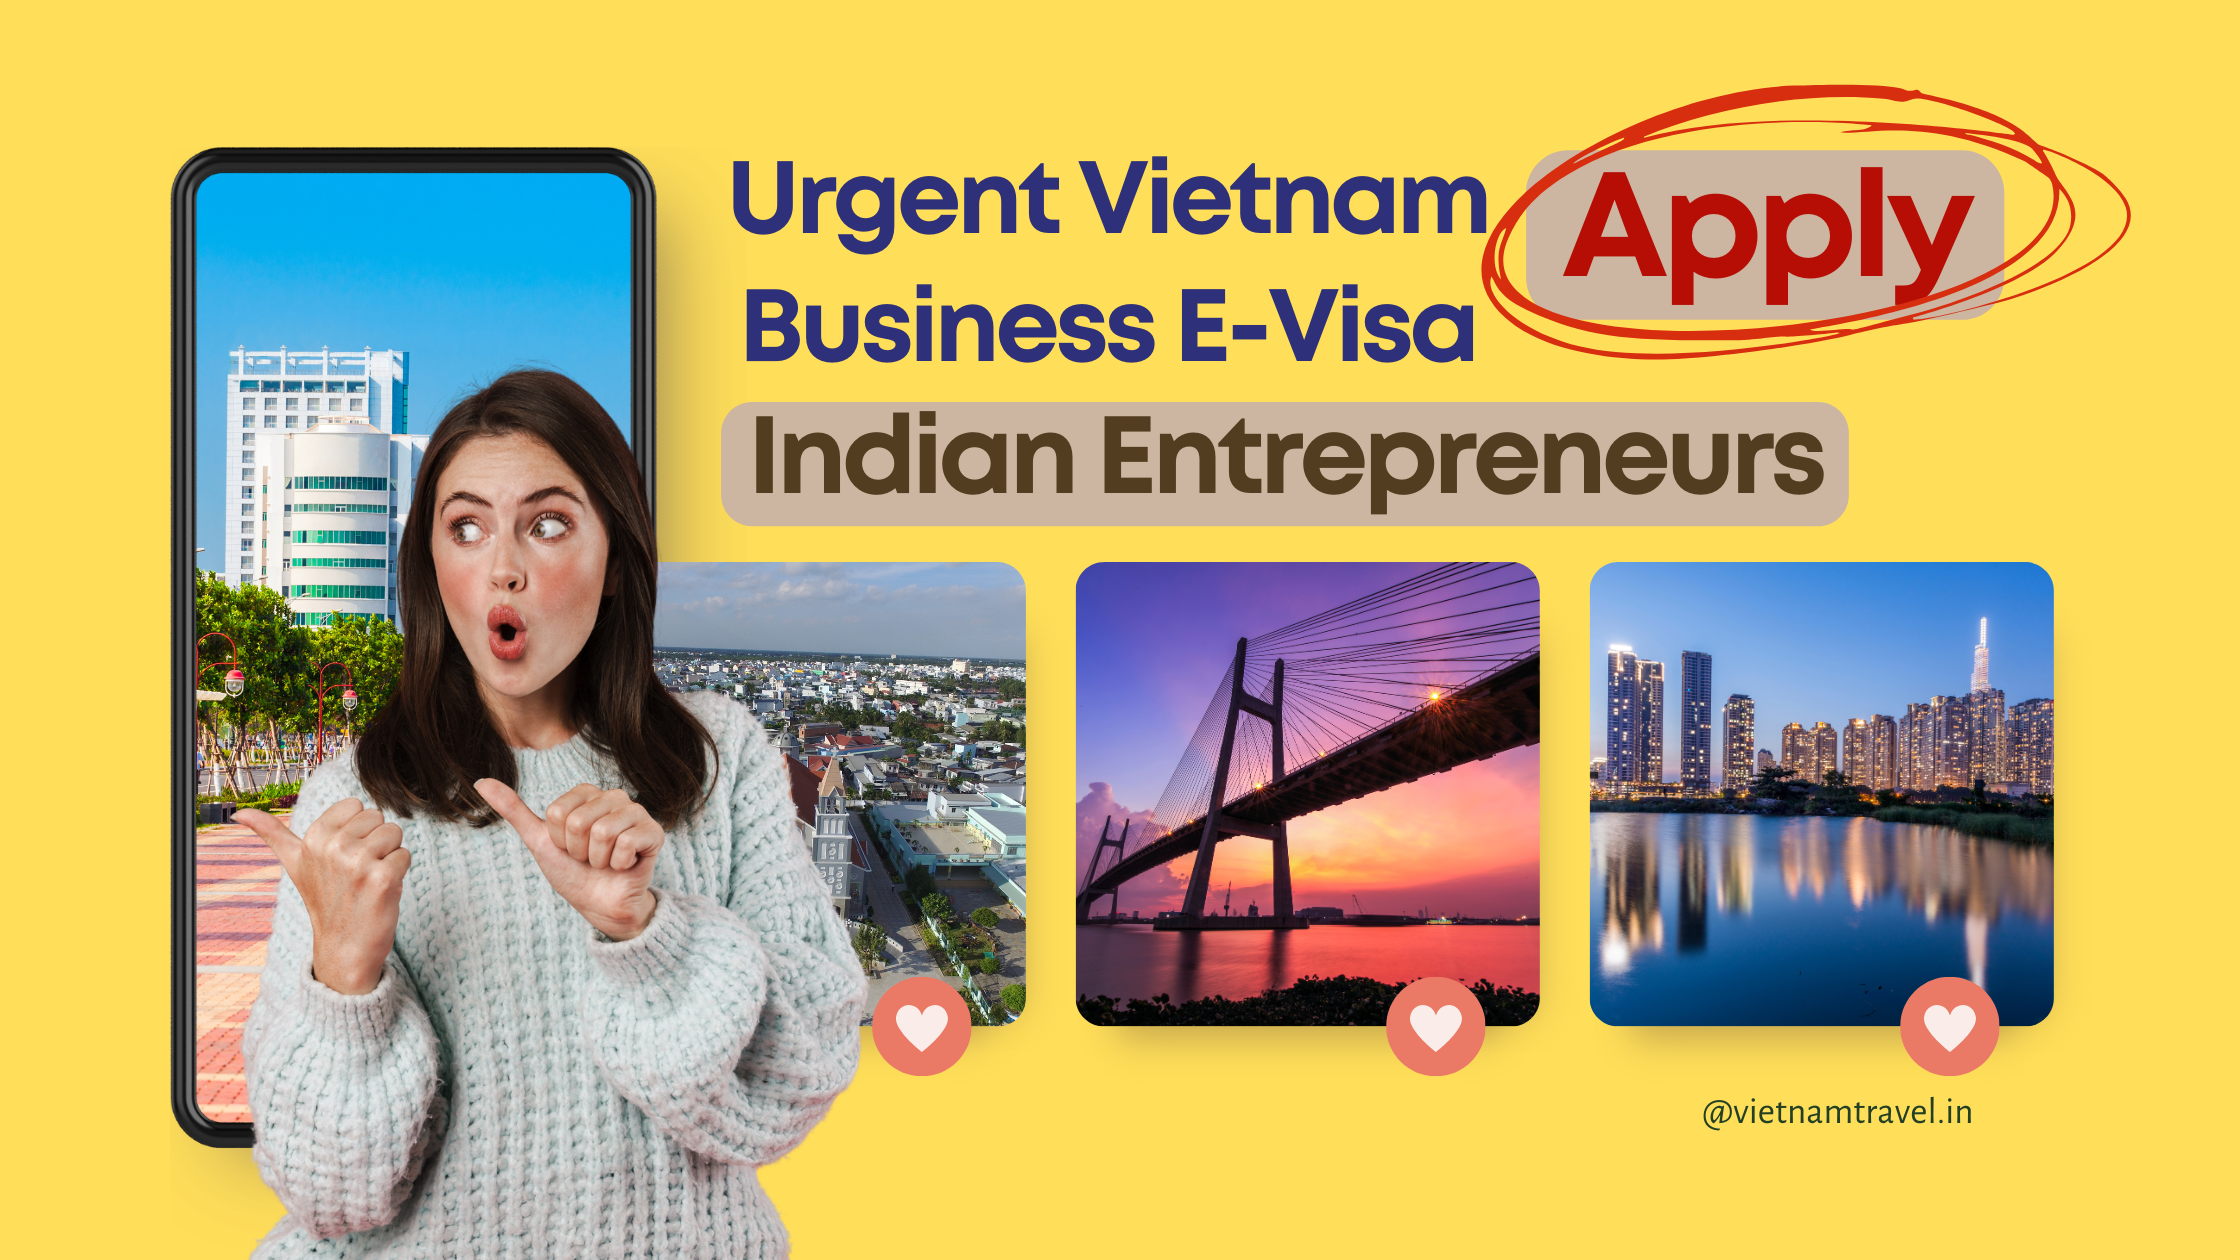 Navigating-Urgent-Vietnam-Business-E-Visa-Services-The-Ultimate-Guide-for-Indian-Entrepreneurs